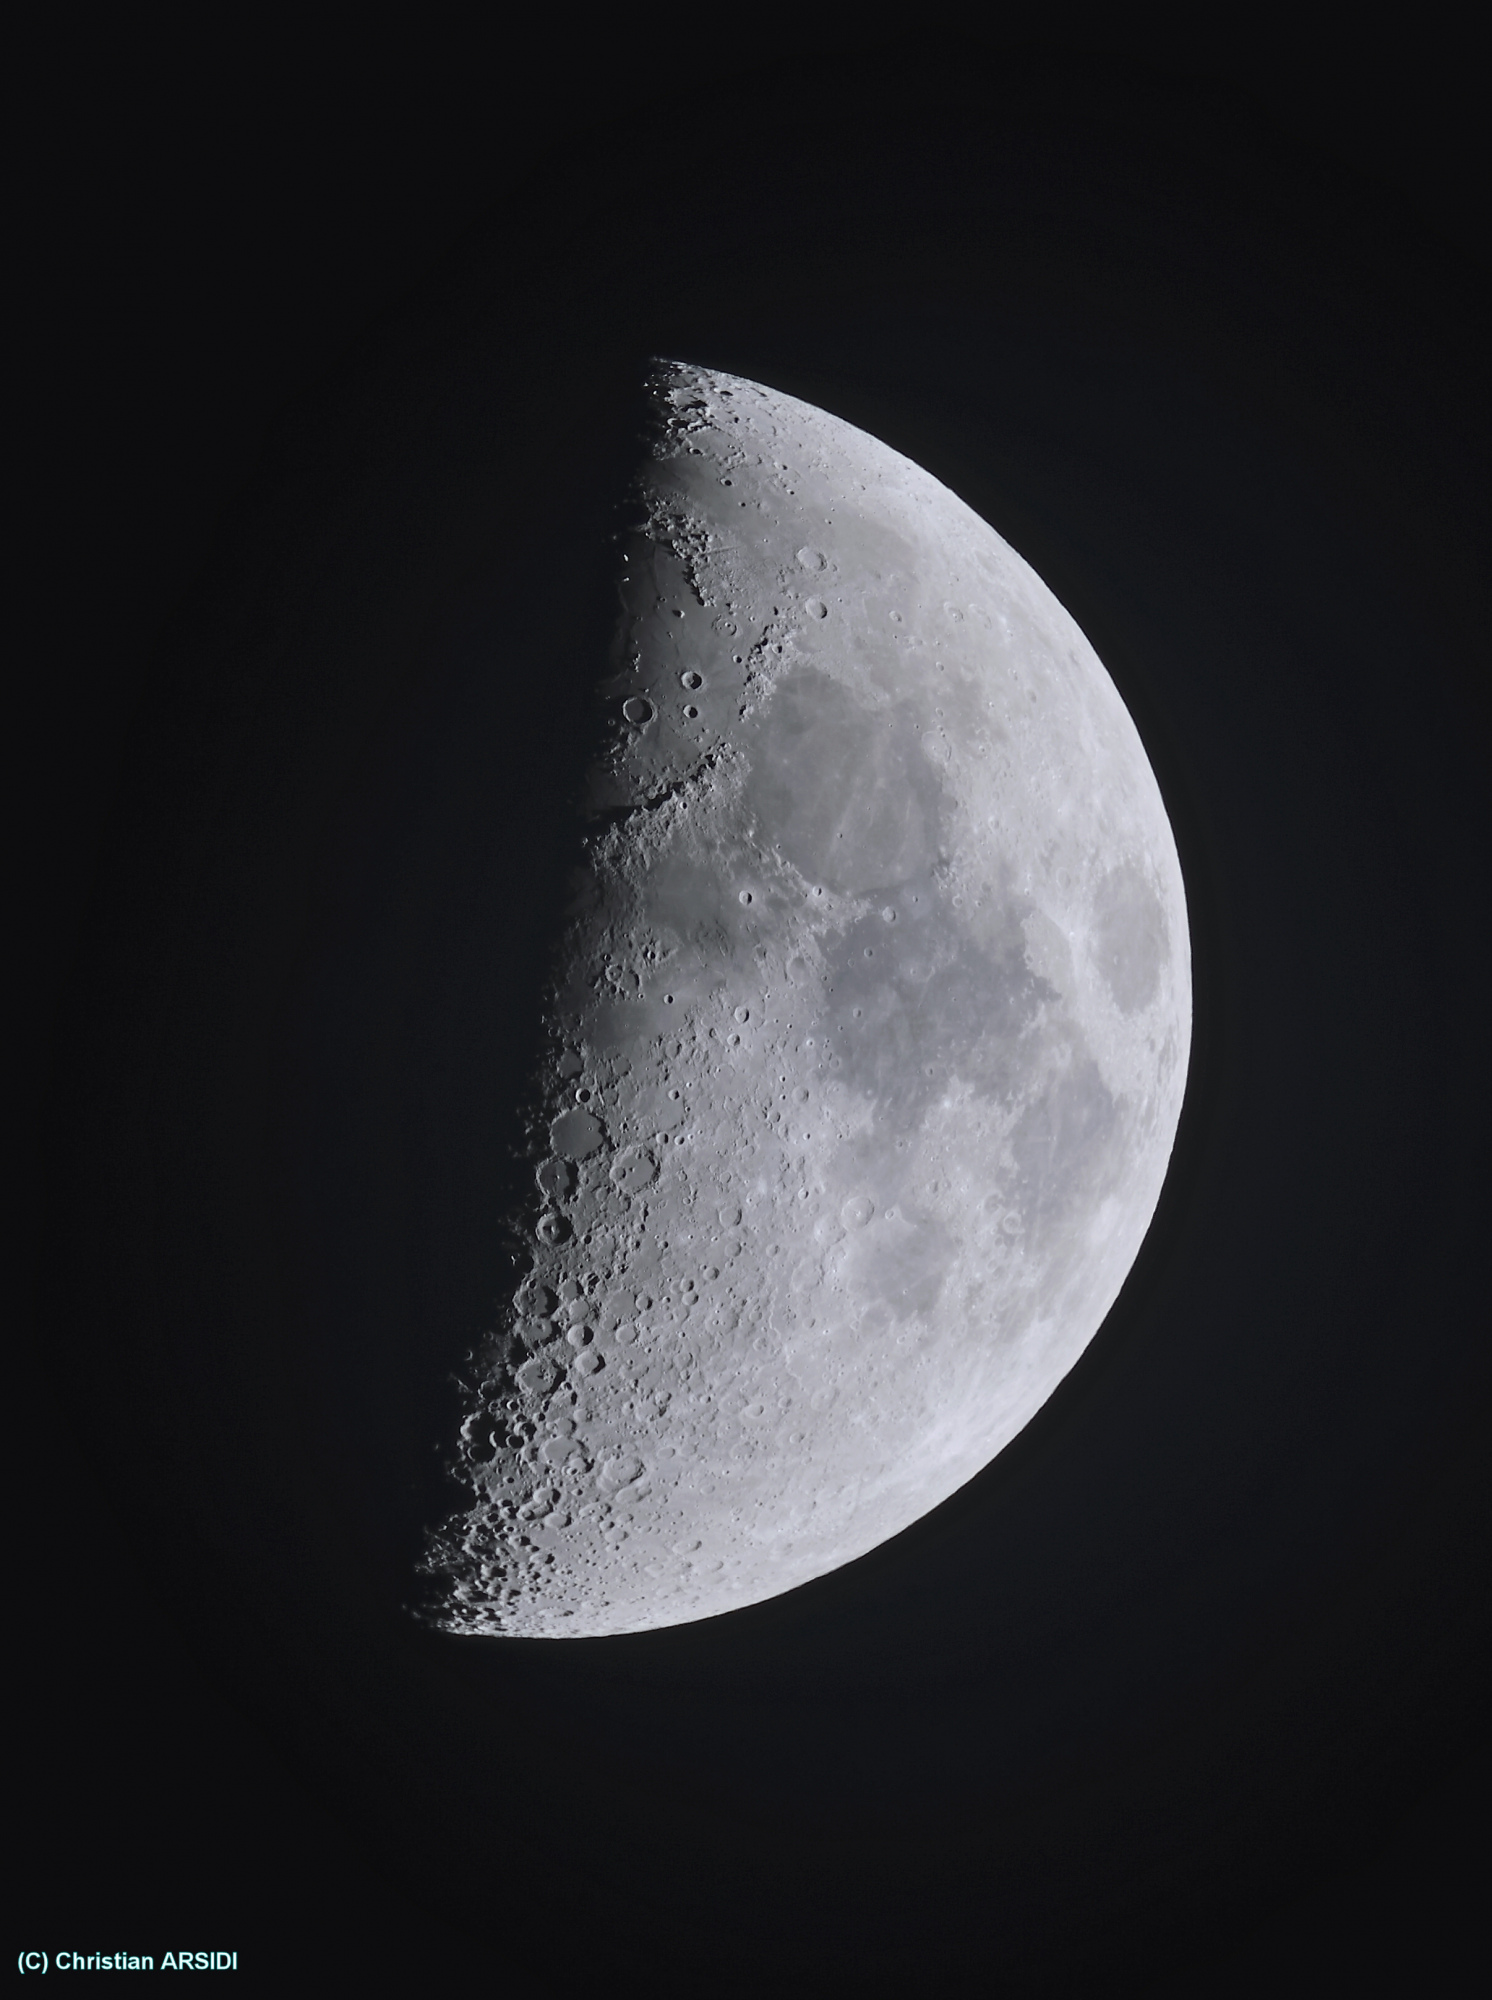 La Lune 5 images RVB MF recadrée_DxO-1 TTB CA JPEG.jpg